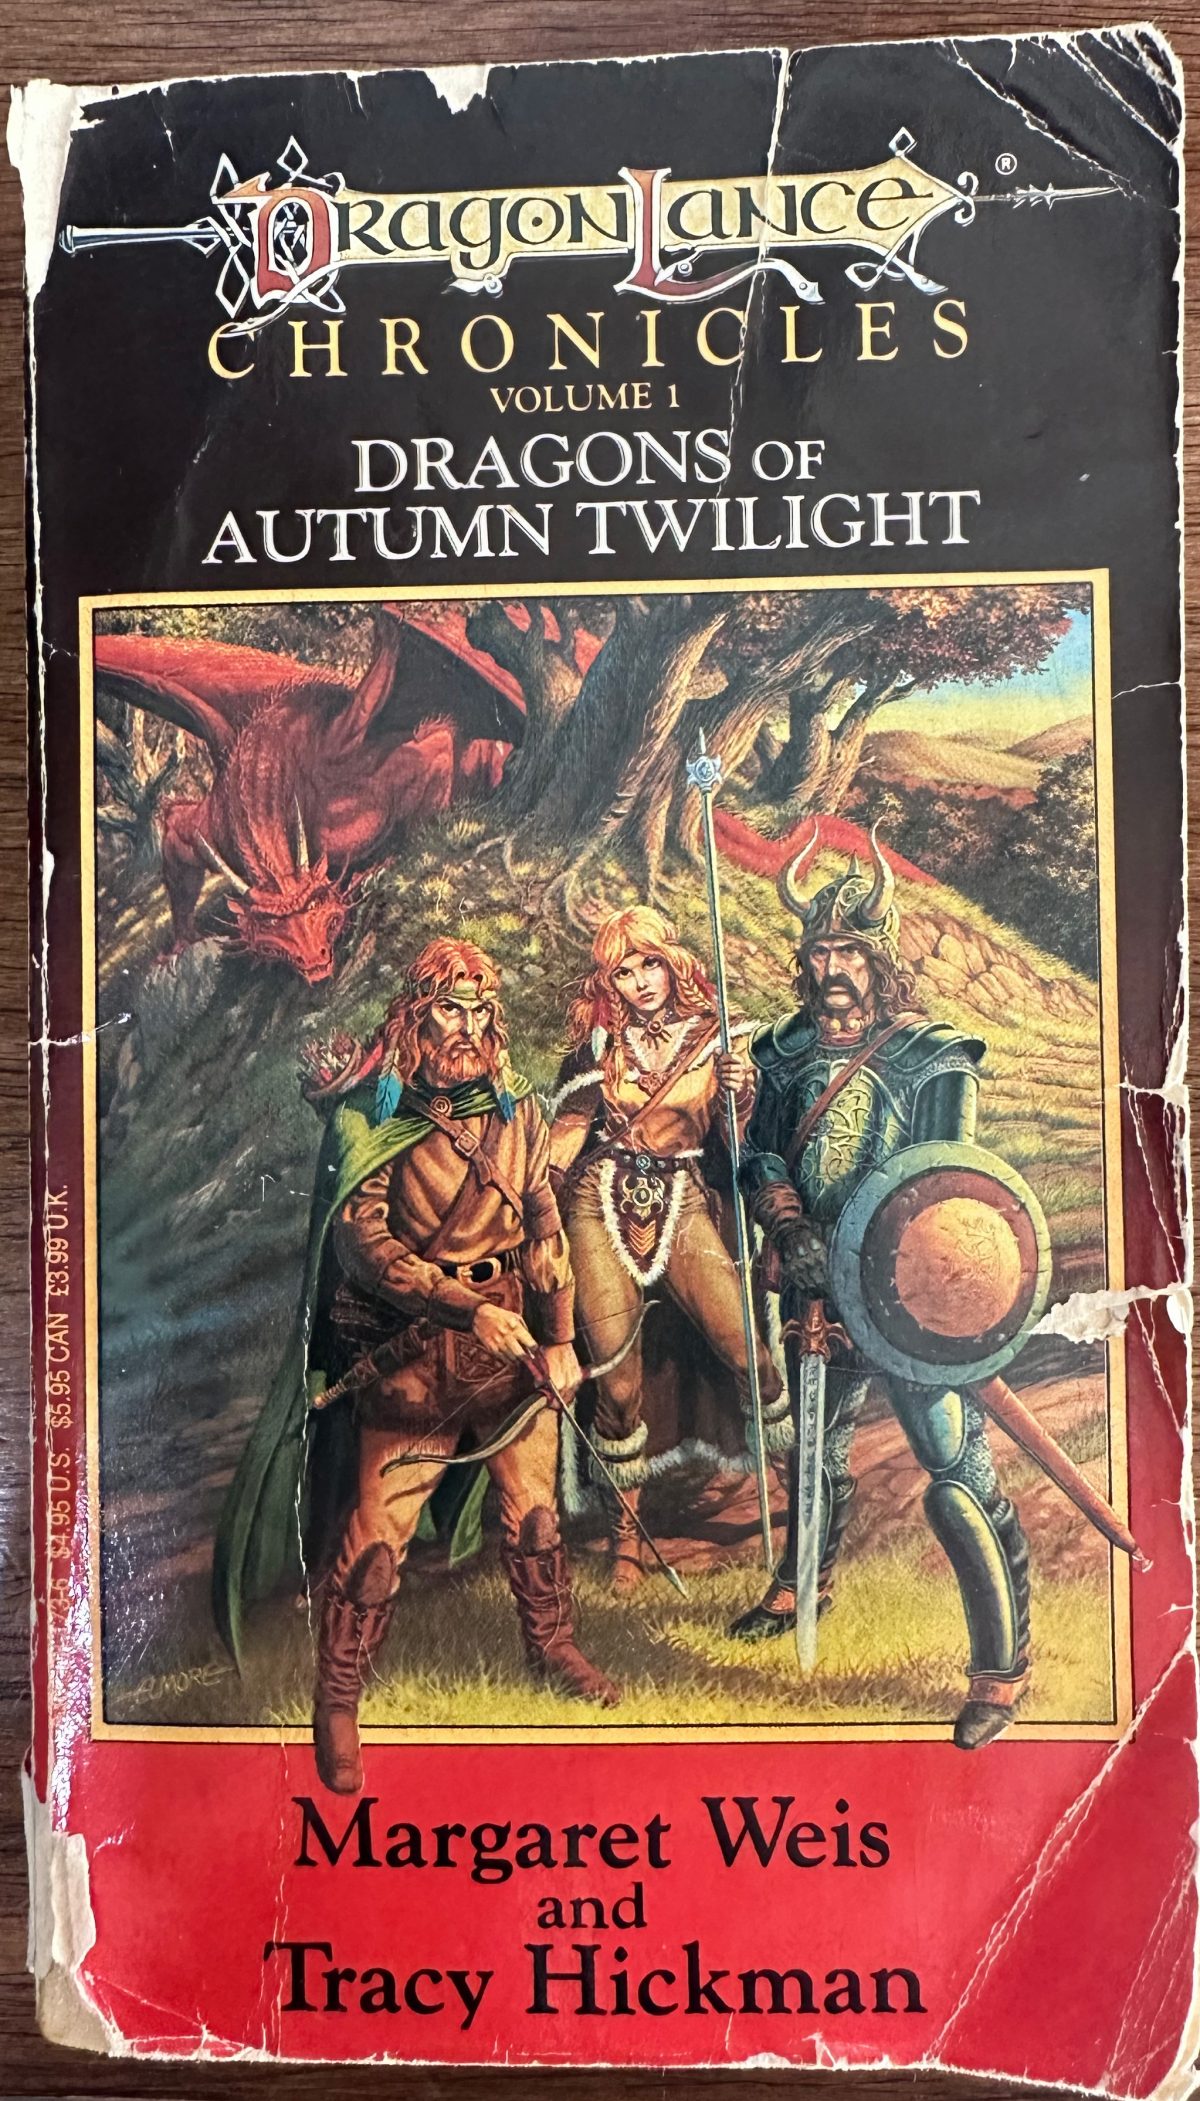 DragonLance Chronicles Vol 1 Dragons of Autumn Twilight